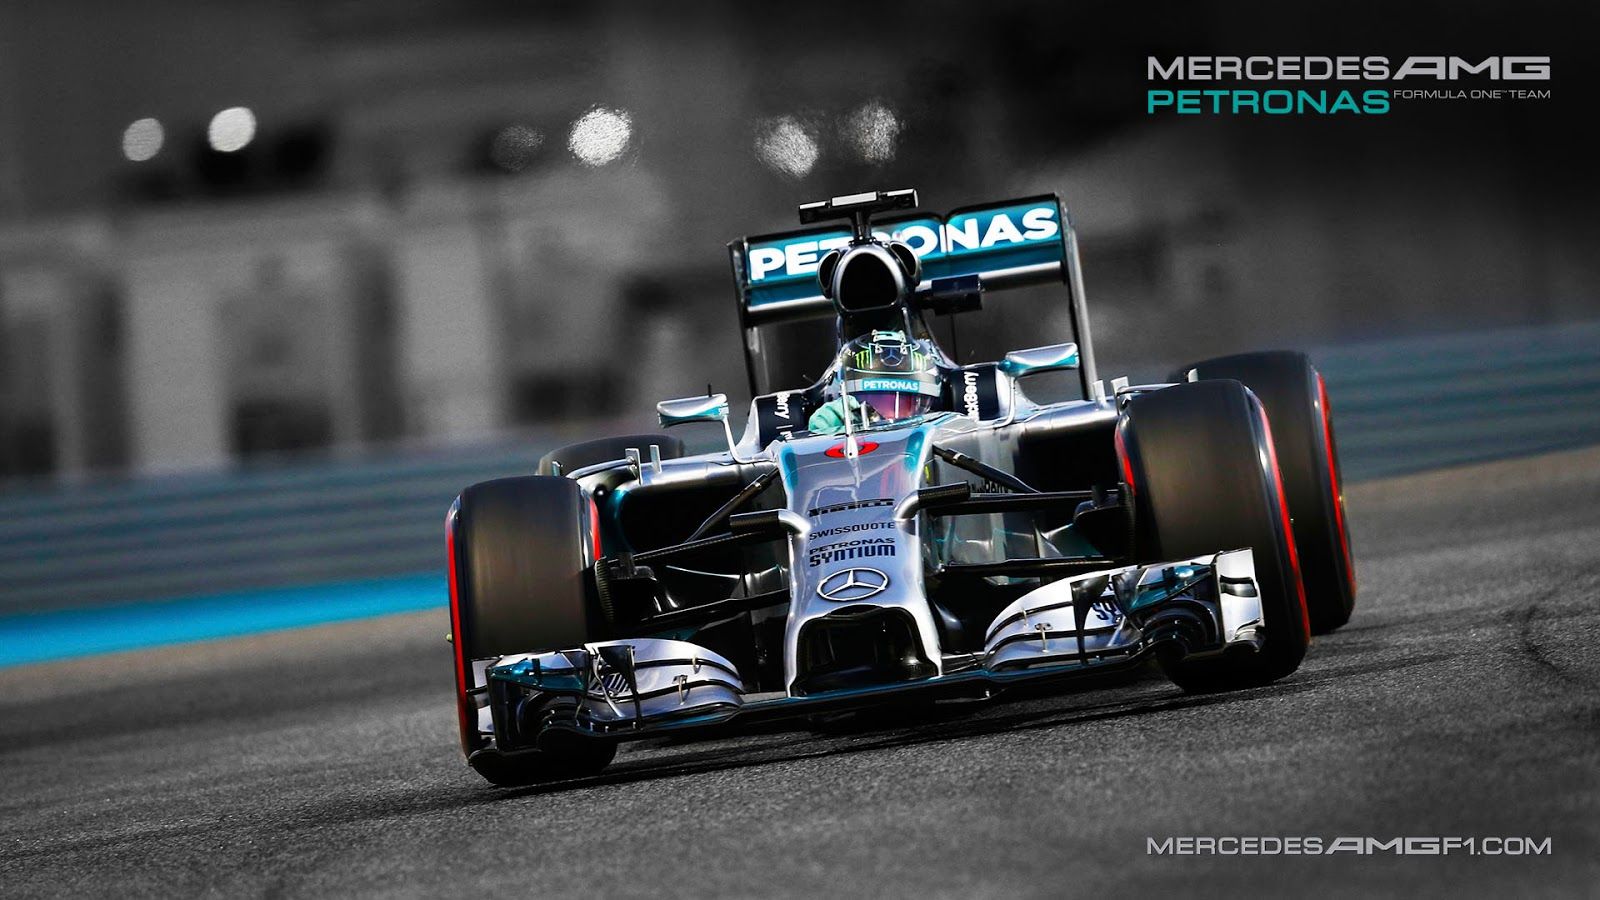 Mercedes Amg Petronas 2017 - HD Wallpaper 